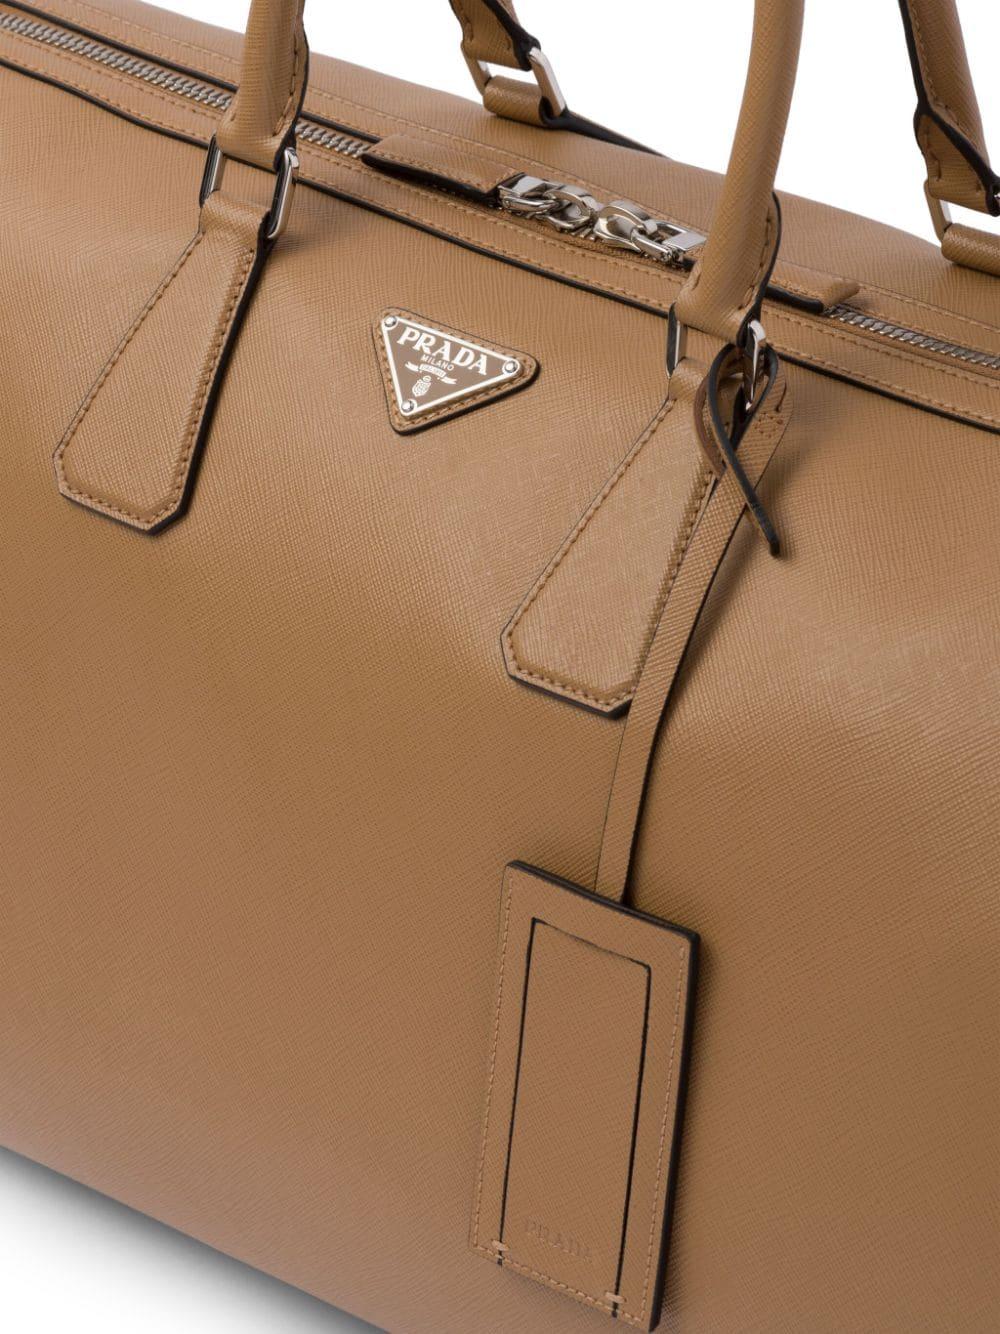 triangle-logo leather tote bag